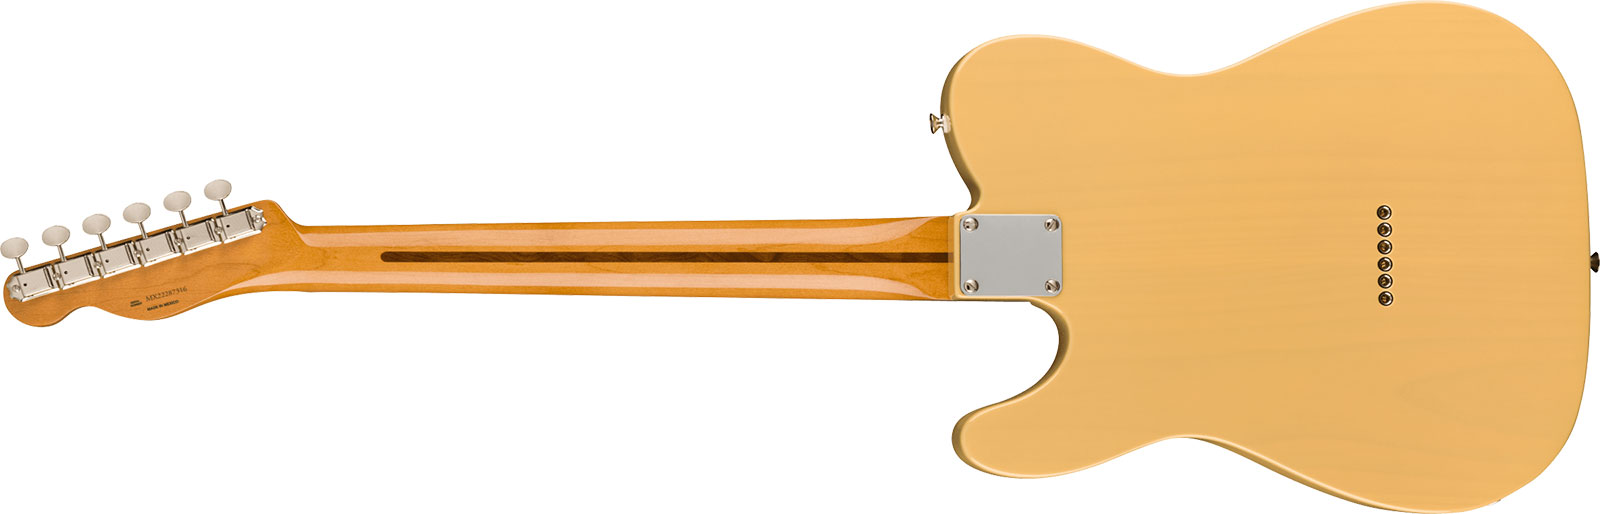 Fender Tele Nocaster 50s Vintera 2 Mex 2s Ht Mn - Blackguard Blonde - Guitarra eléctrica con forma de tel - Variation 1